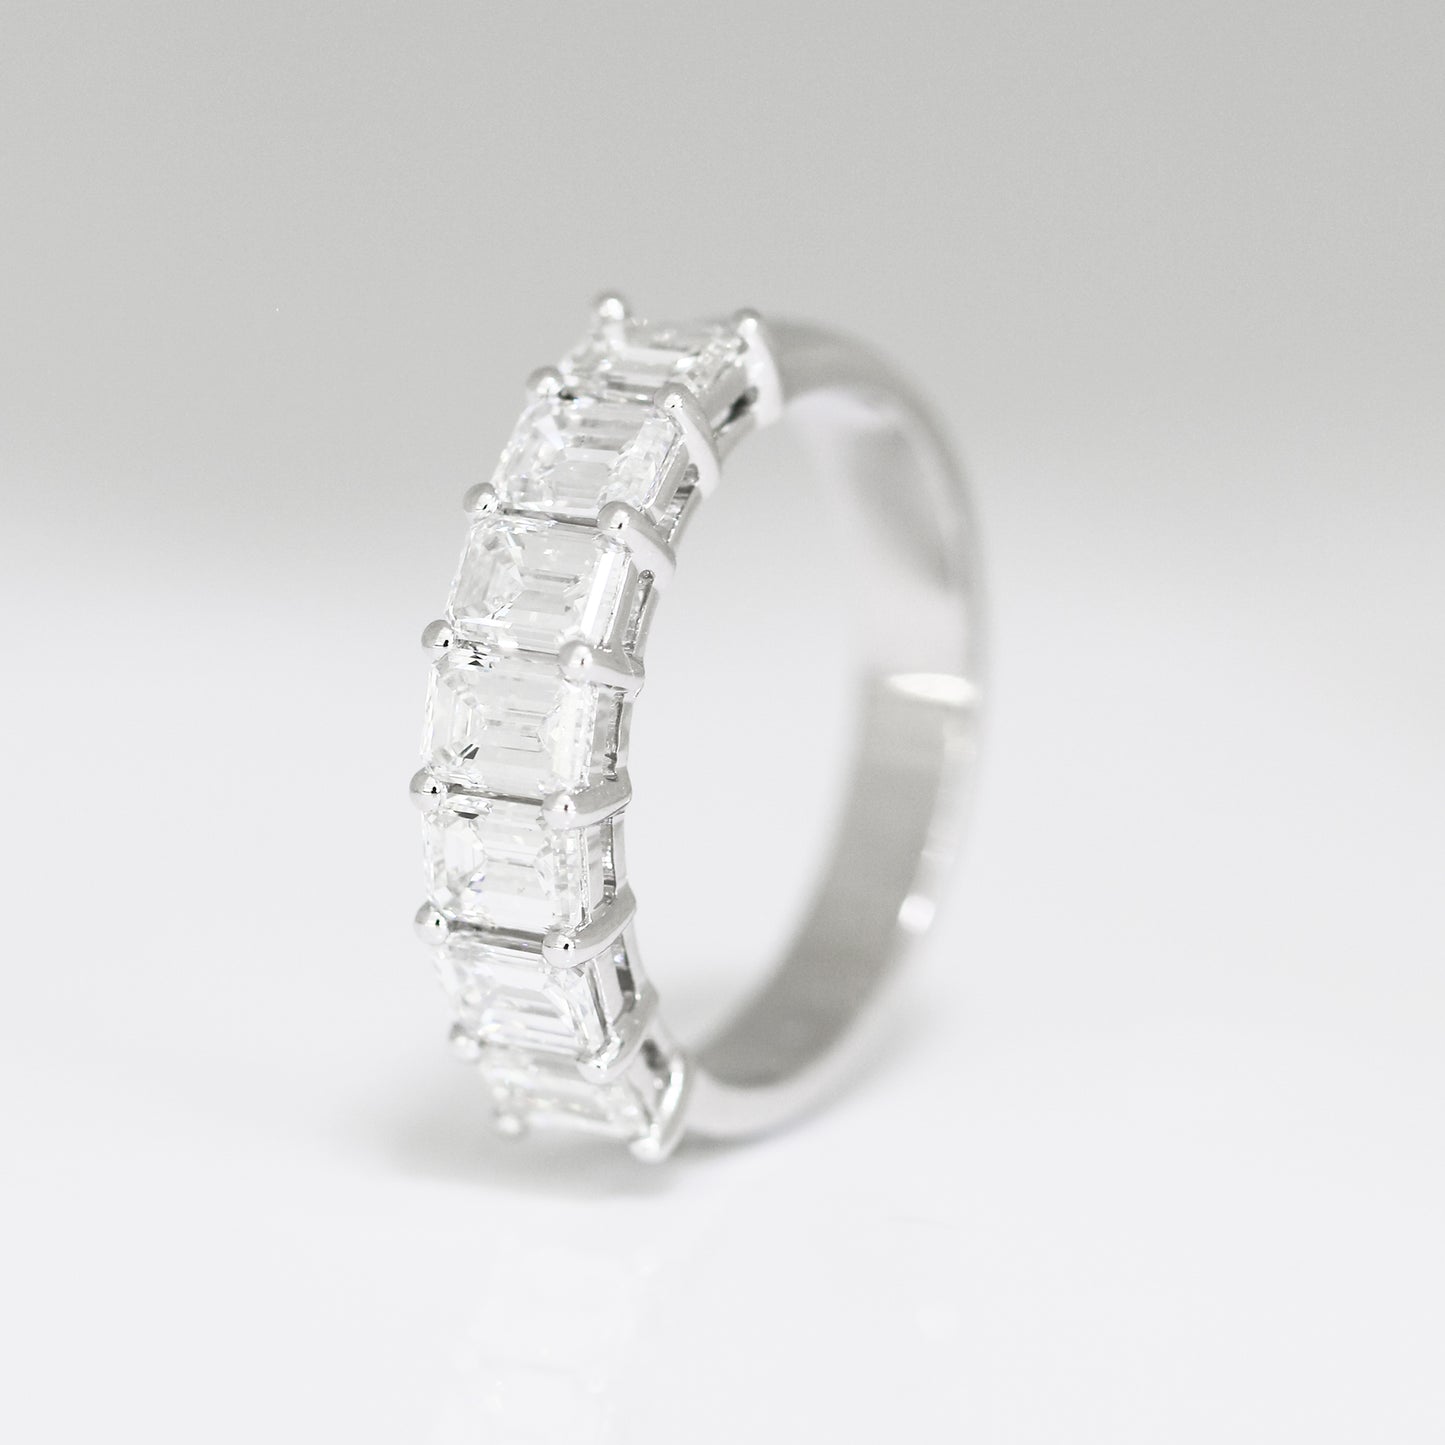 18k白金祖母綠切割鑽石排戒指側面 18k White Gold 1.75ct Emerald Diamond Ring on side view